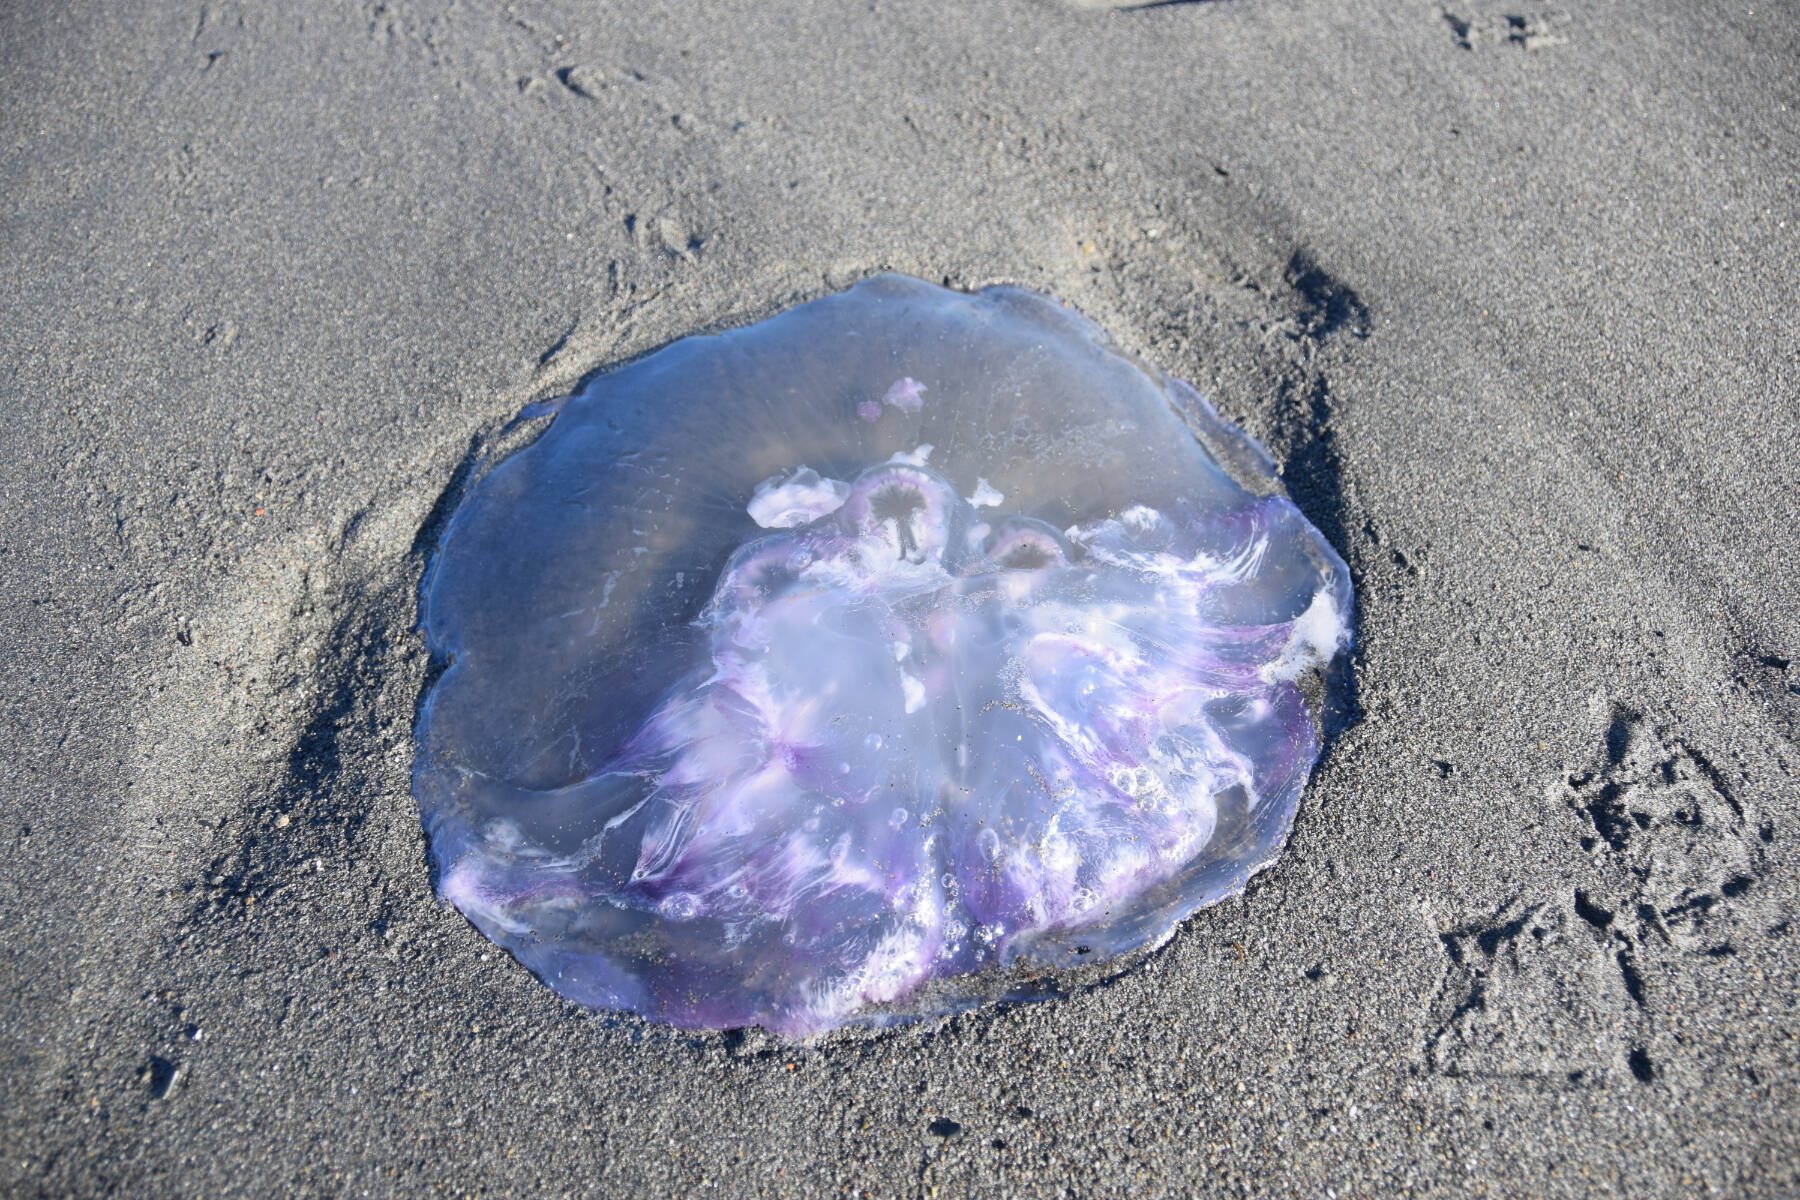 A purple jellyfish lays stranded on the beach at low tide on Sunday, Oct. 22, 2023 in Homer, Alaska. (Finn Heimbold/Homer News)